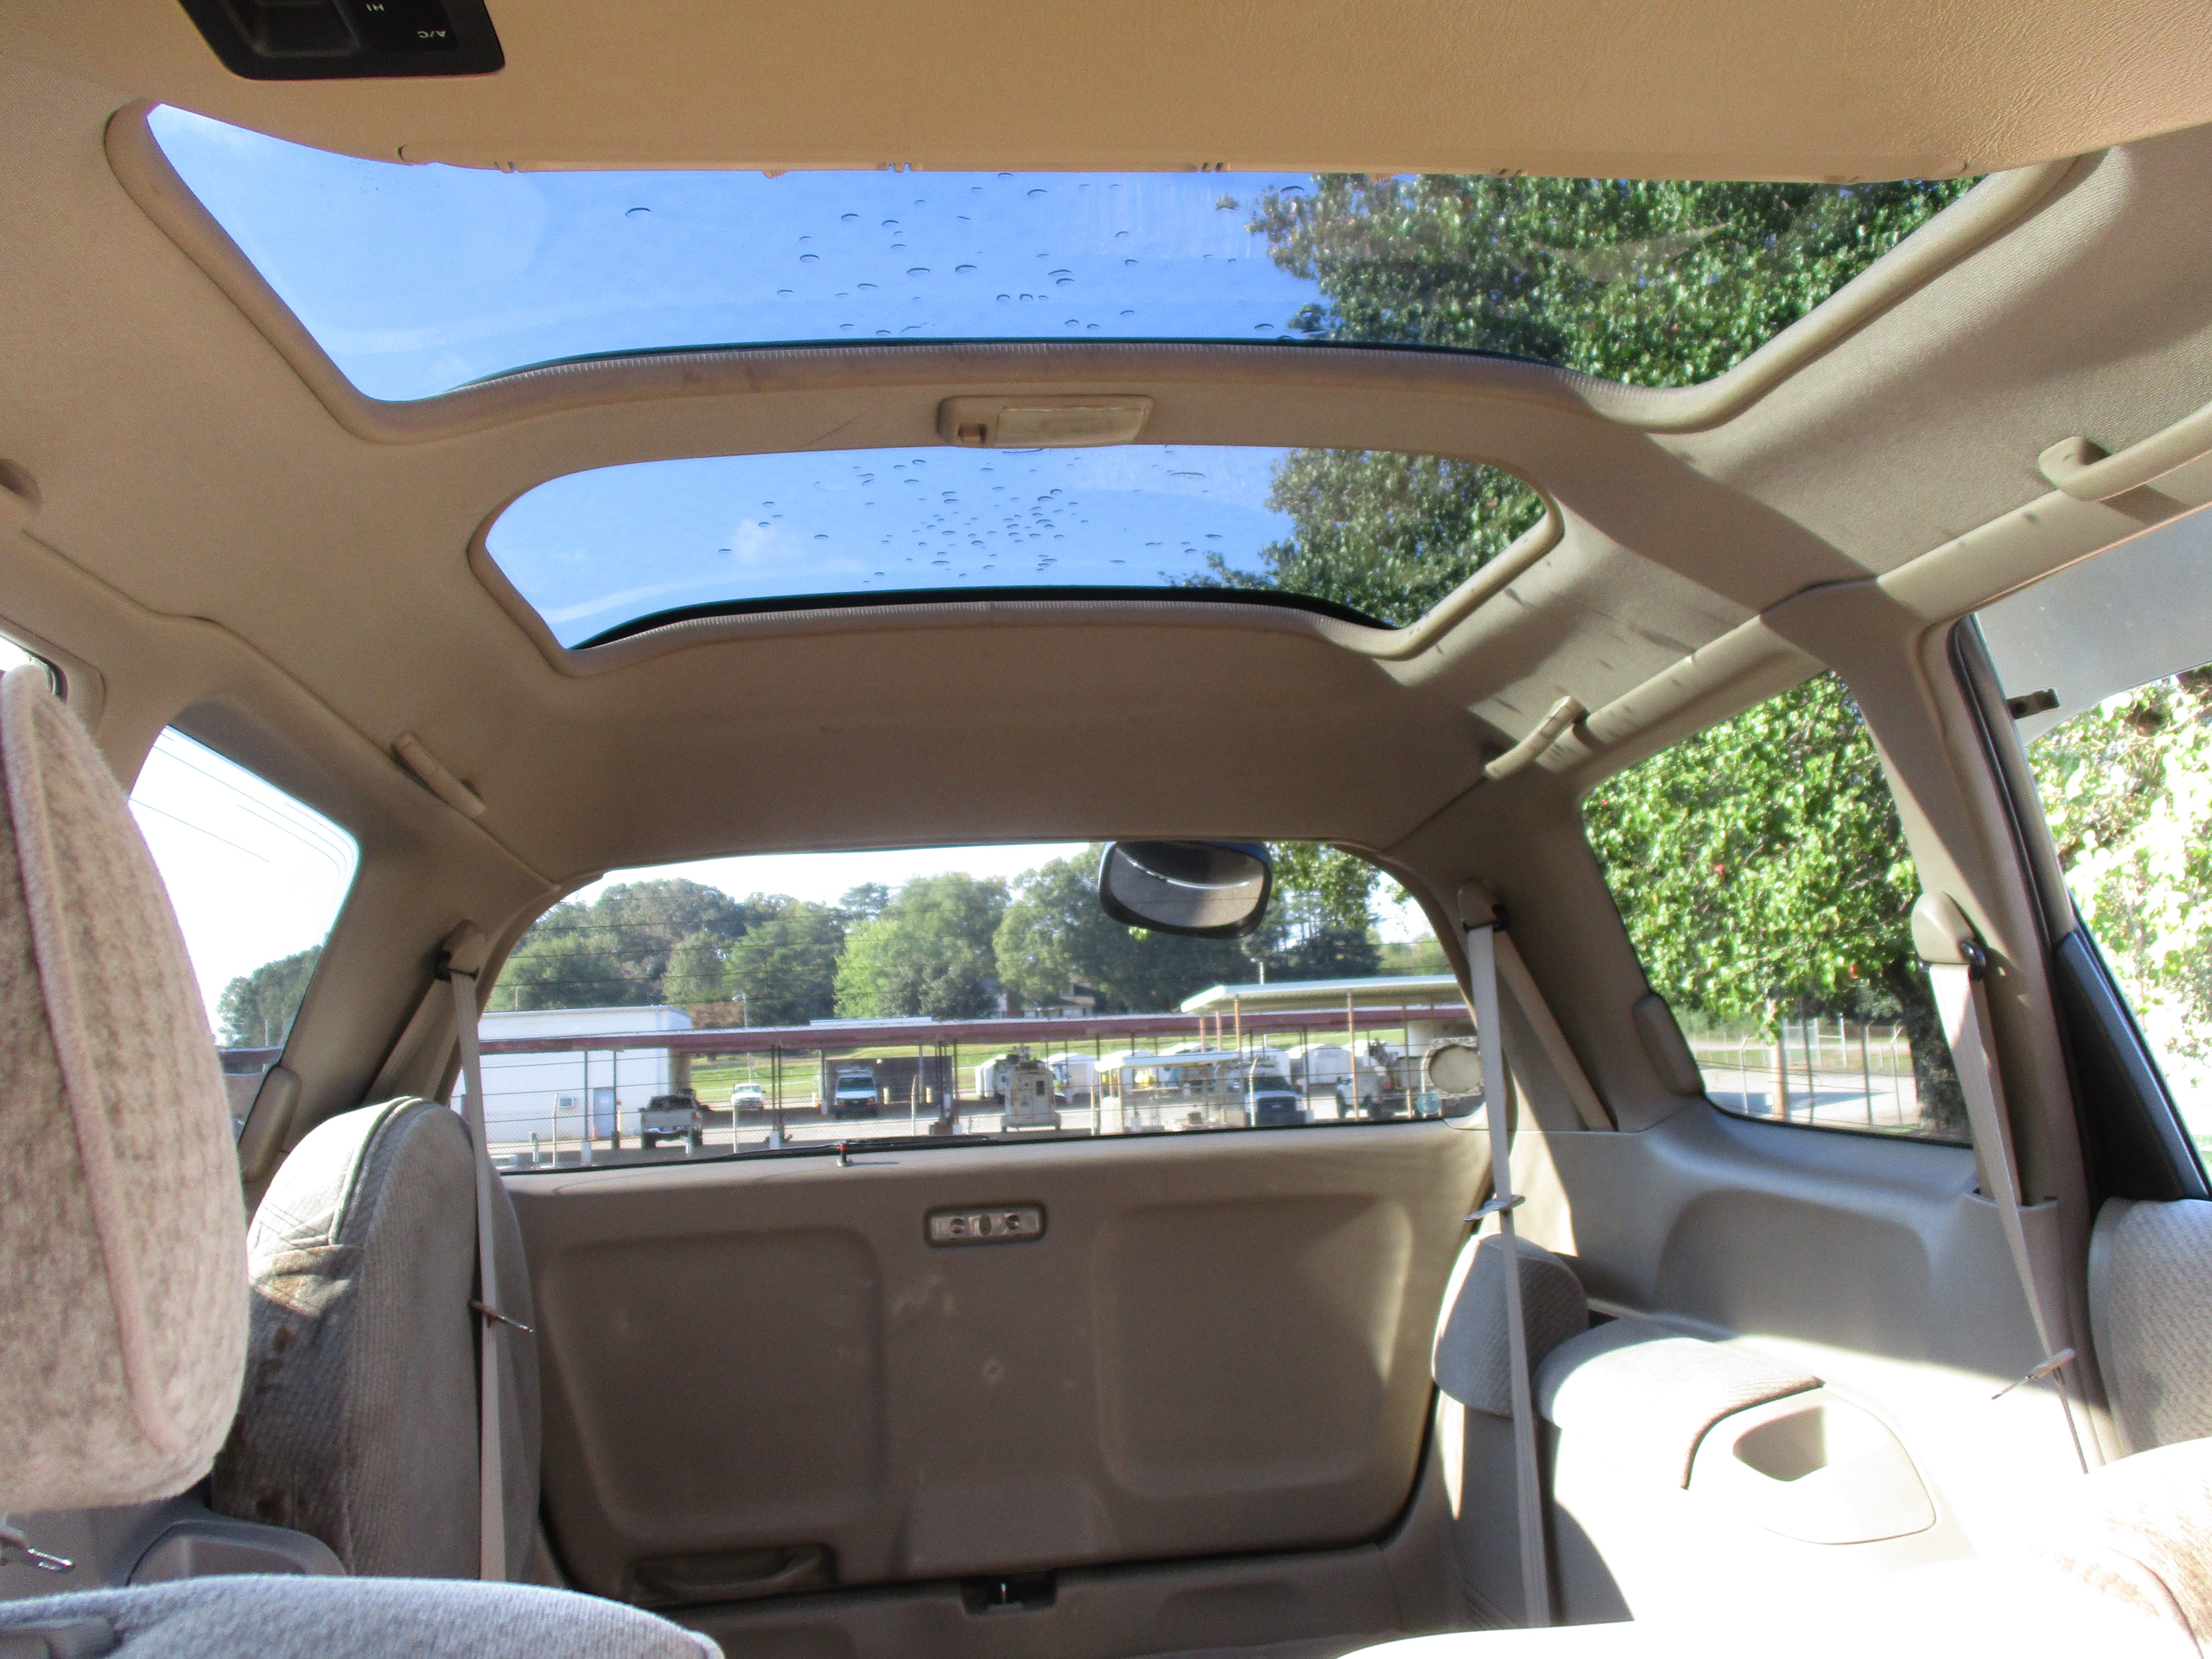 JDM 96 Honda Odyssey Fully Loaded Bubble Top Panoramic Roof 4WD RHD Van Rare